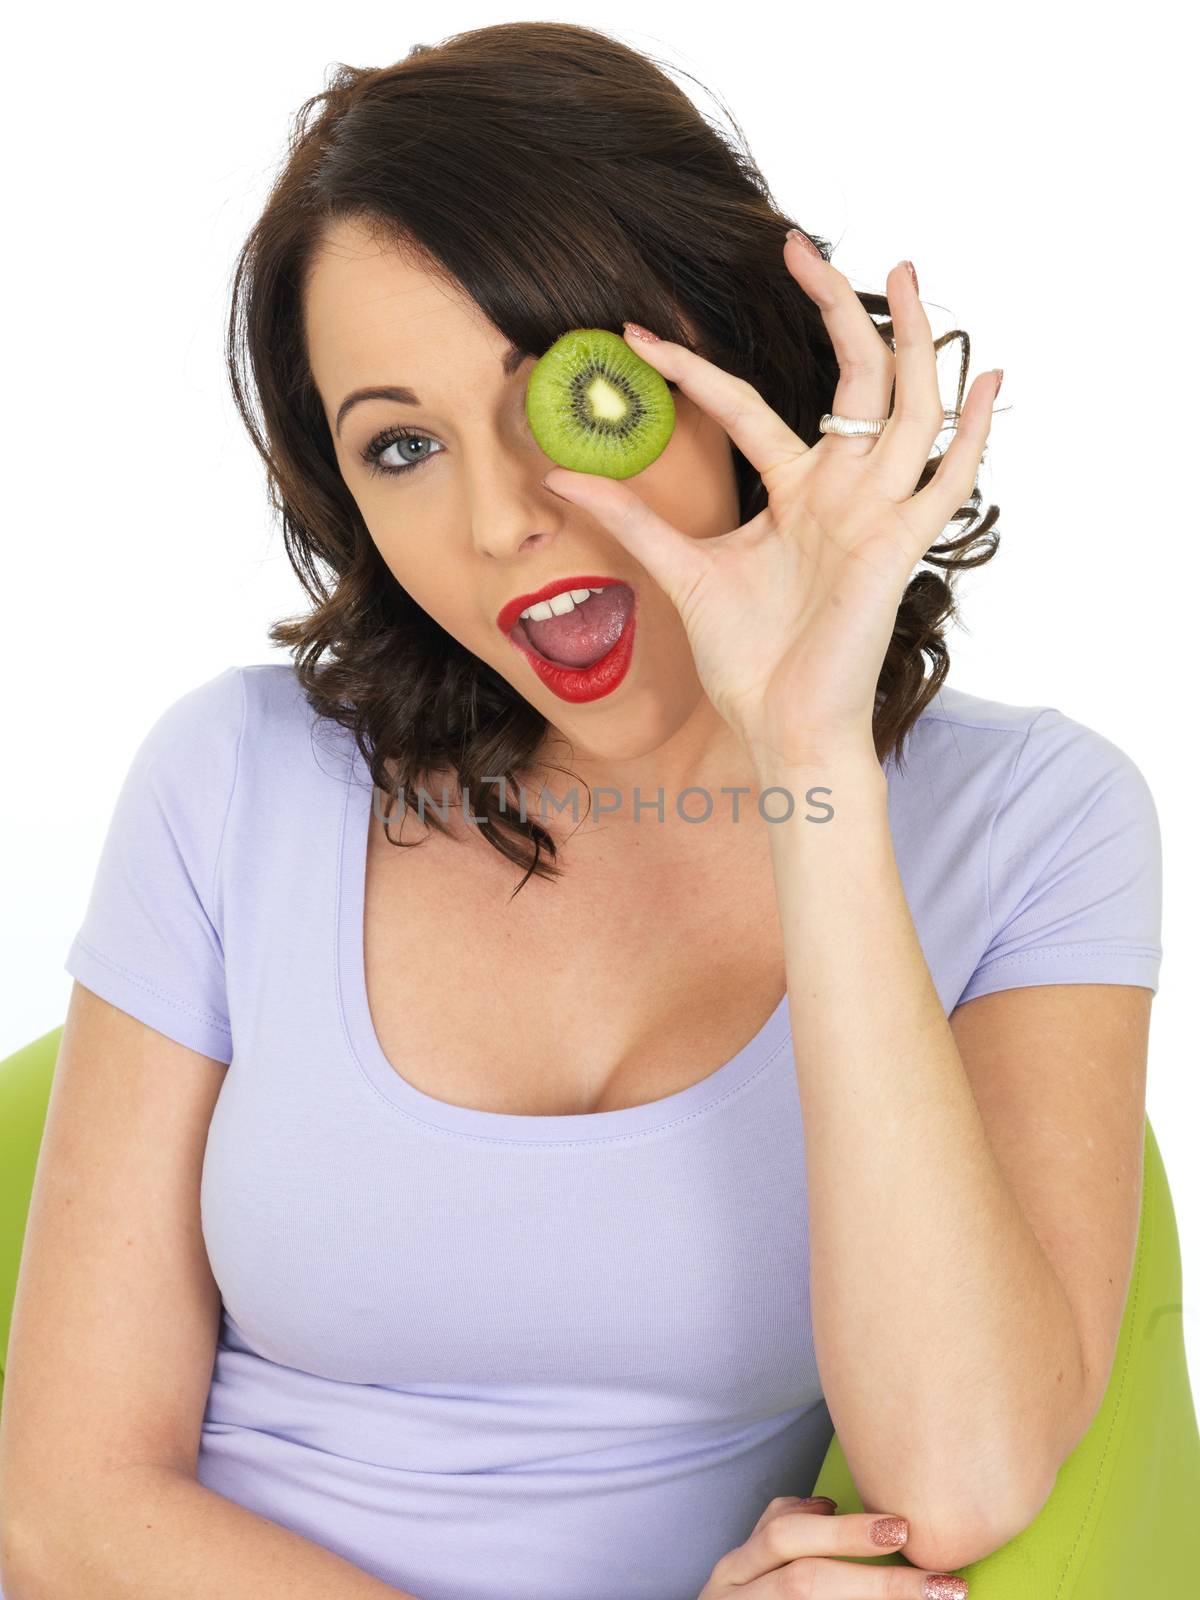 Young Woman Holding Fresh Ripe Kiwi Fruit by Whiteboxmedia